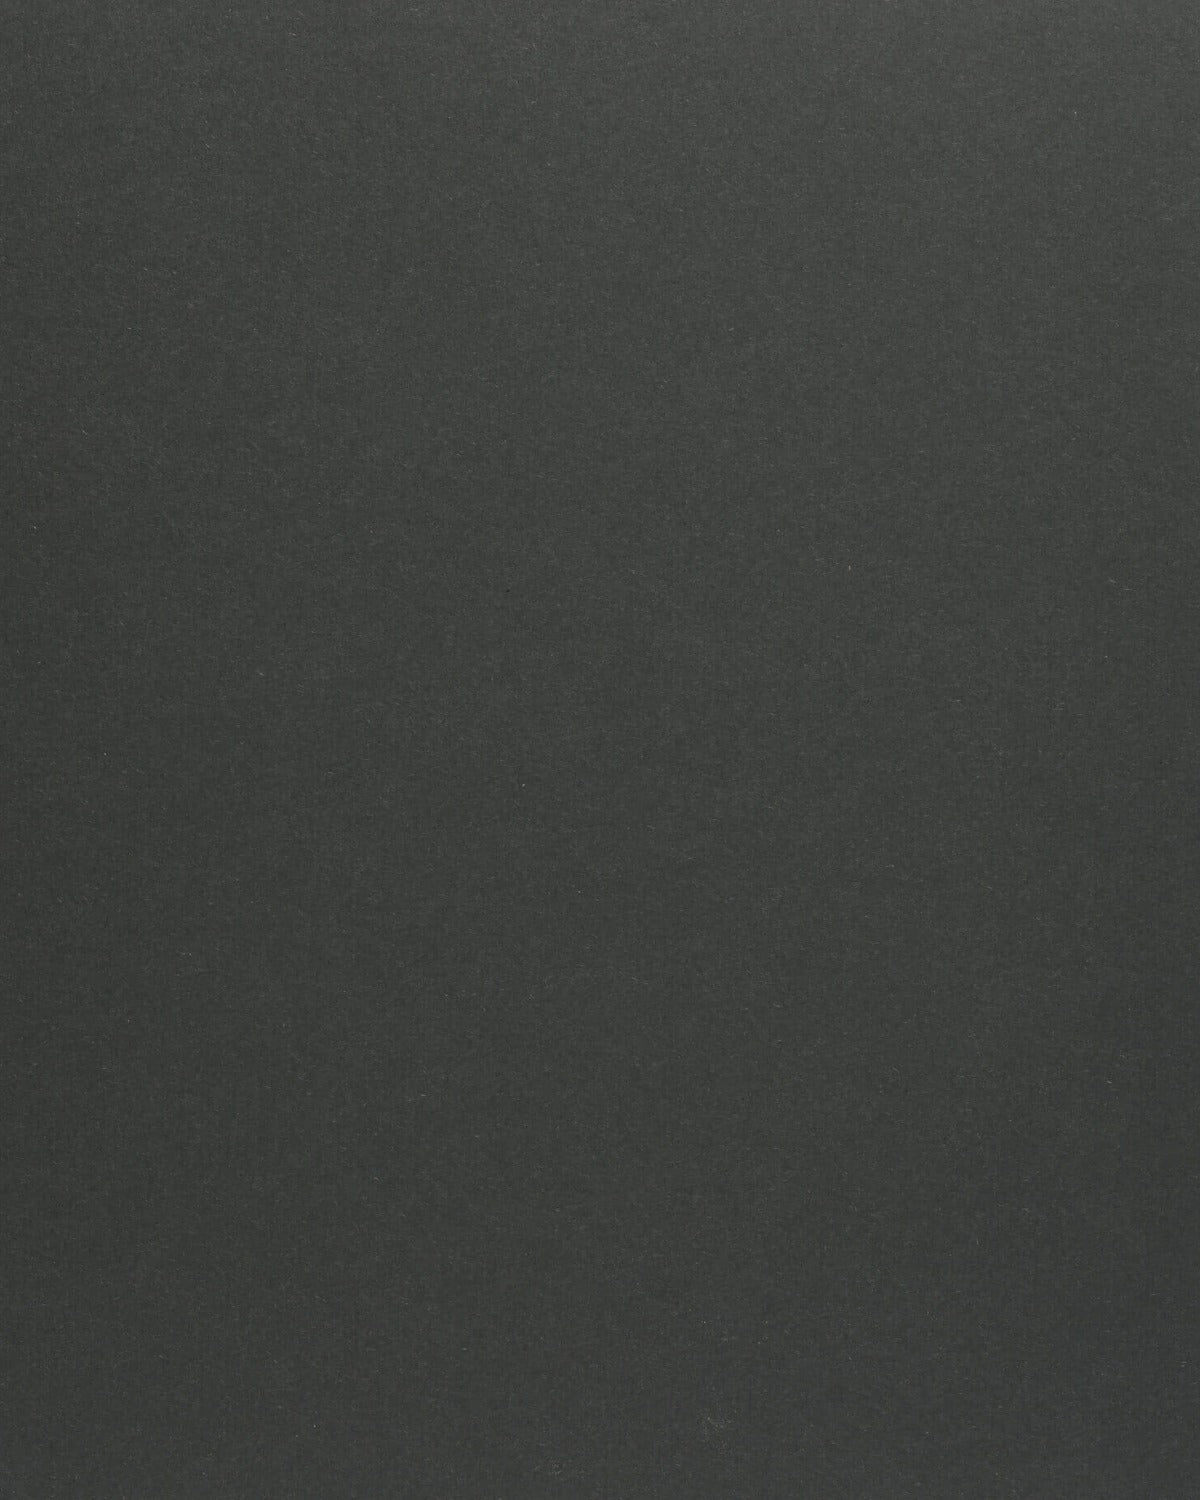 Nero Black | Woodstock Cardstock Paper Cover | 105 lb | 285 GSM / 8.5 x 11 / 25 Sheets